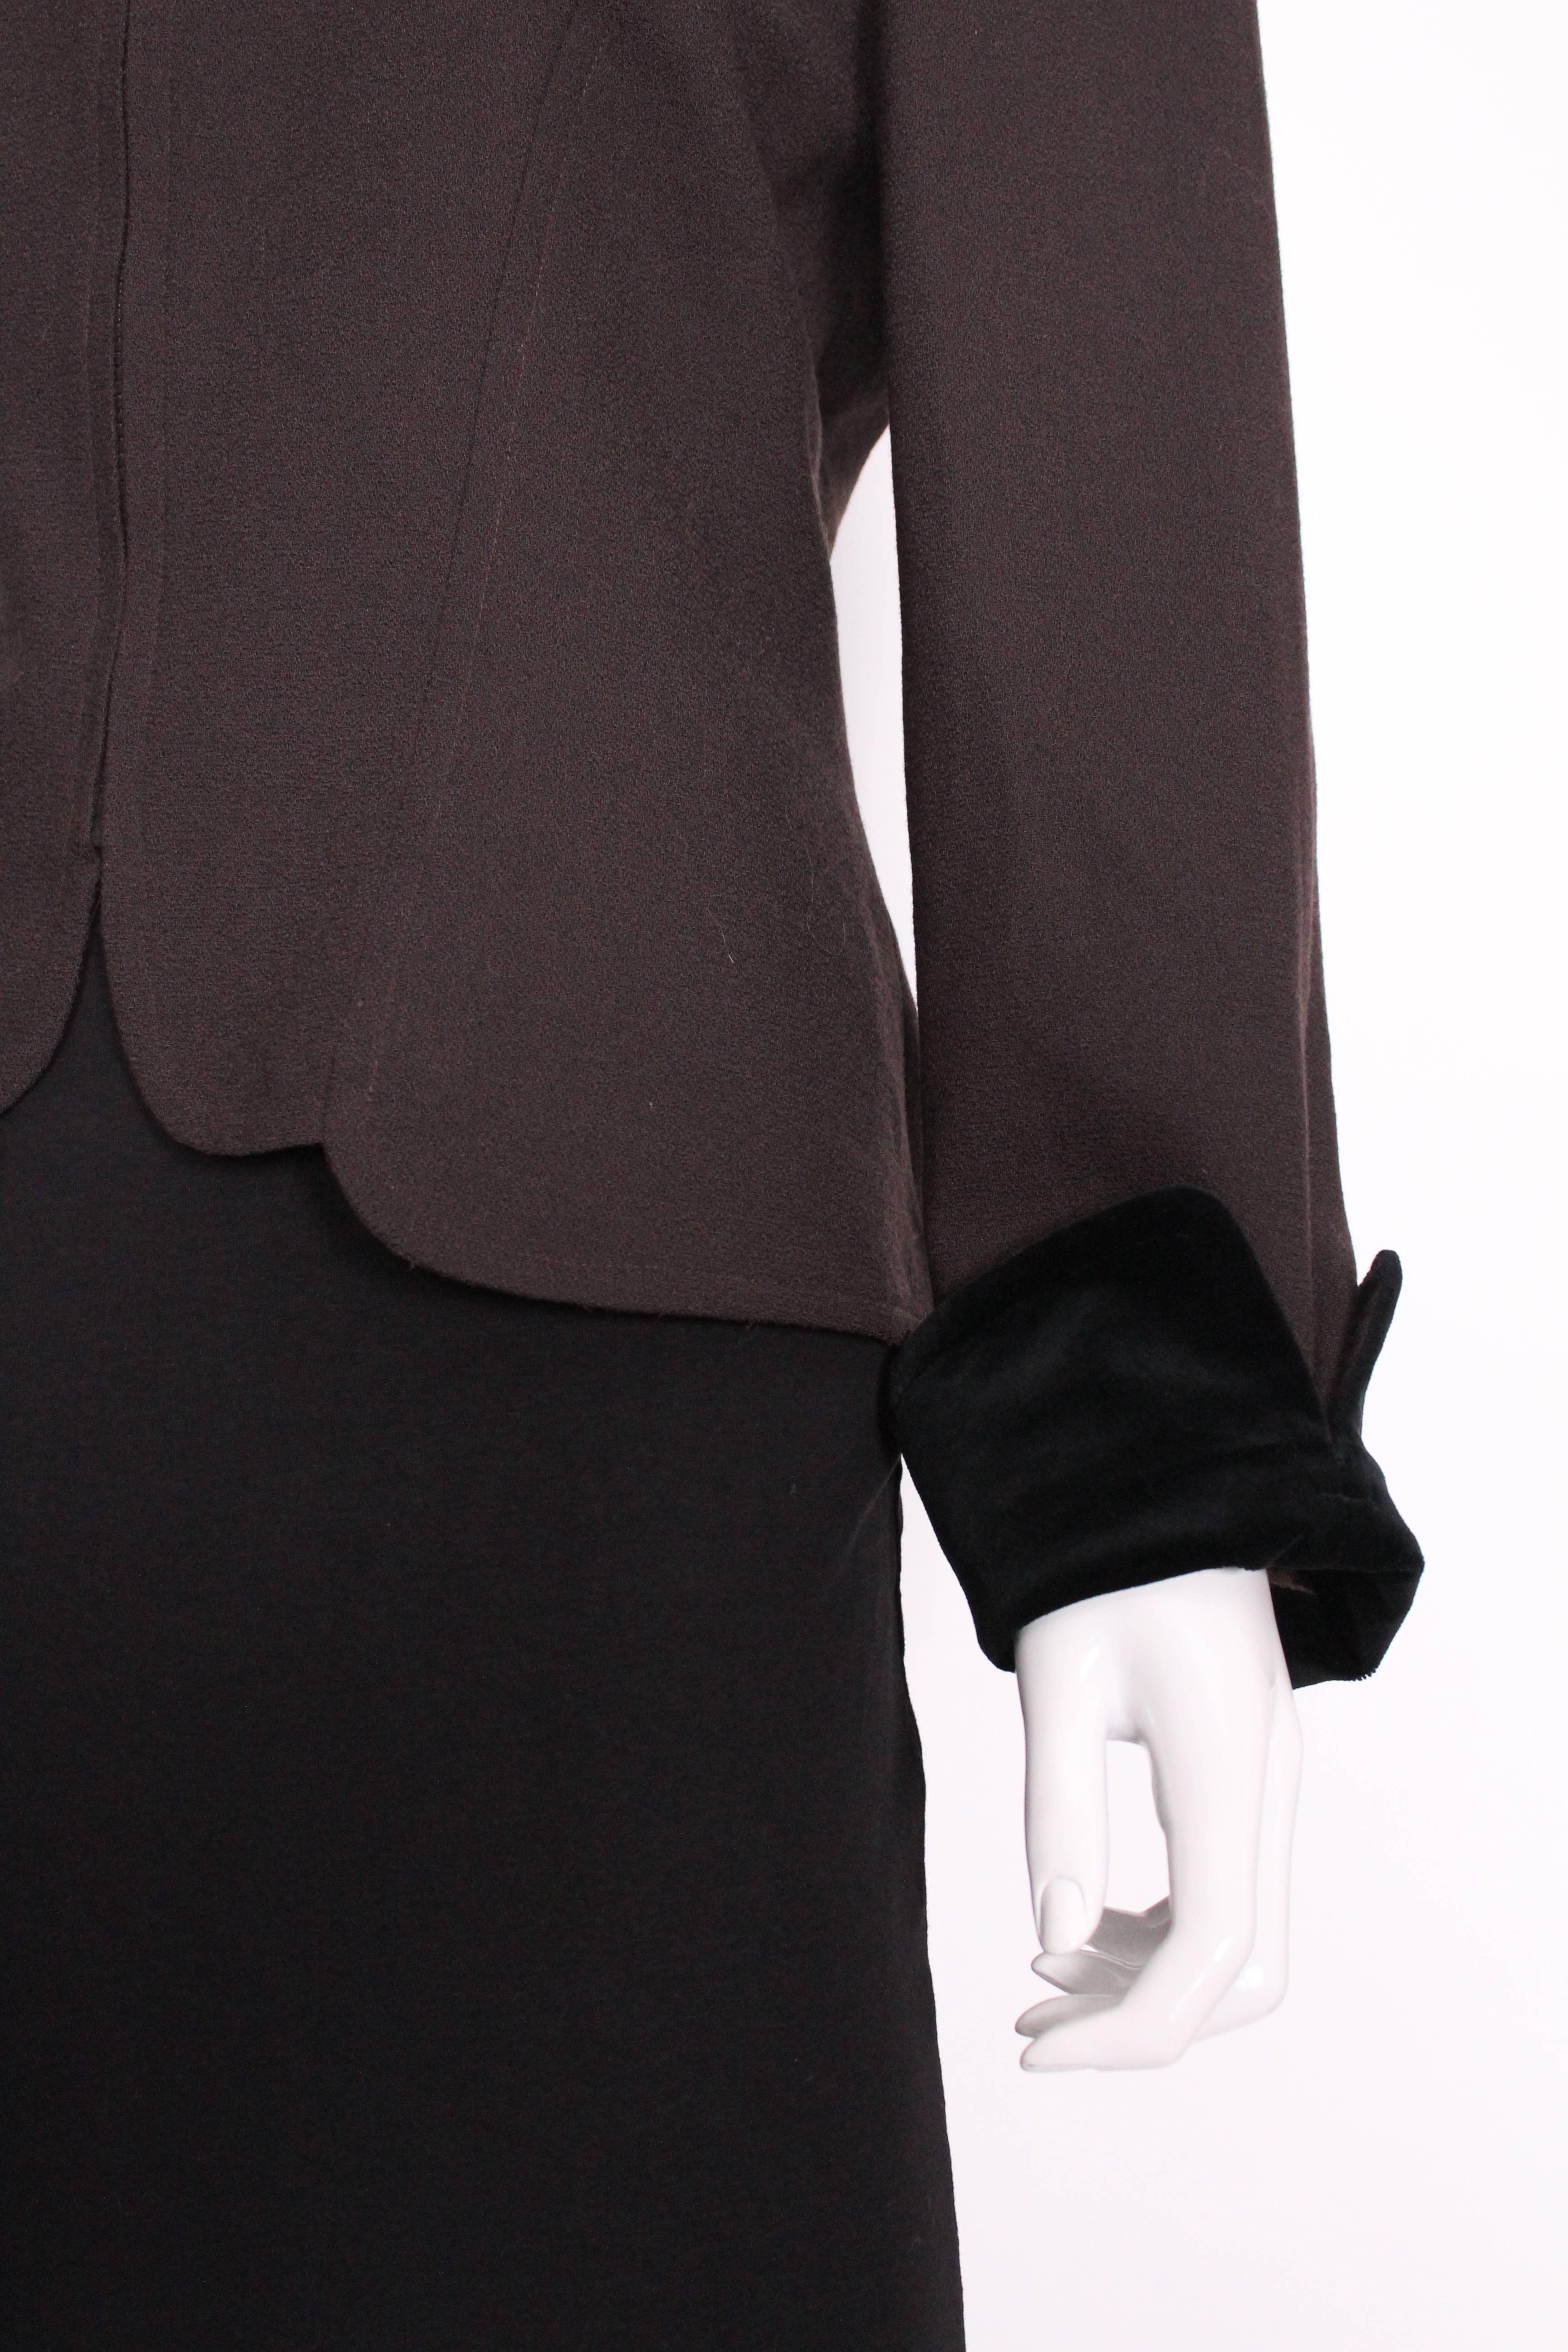 Christian Dior Zip up Jacket 2